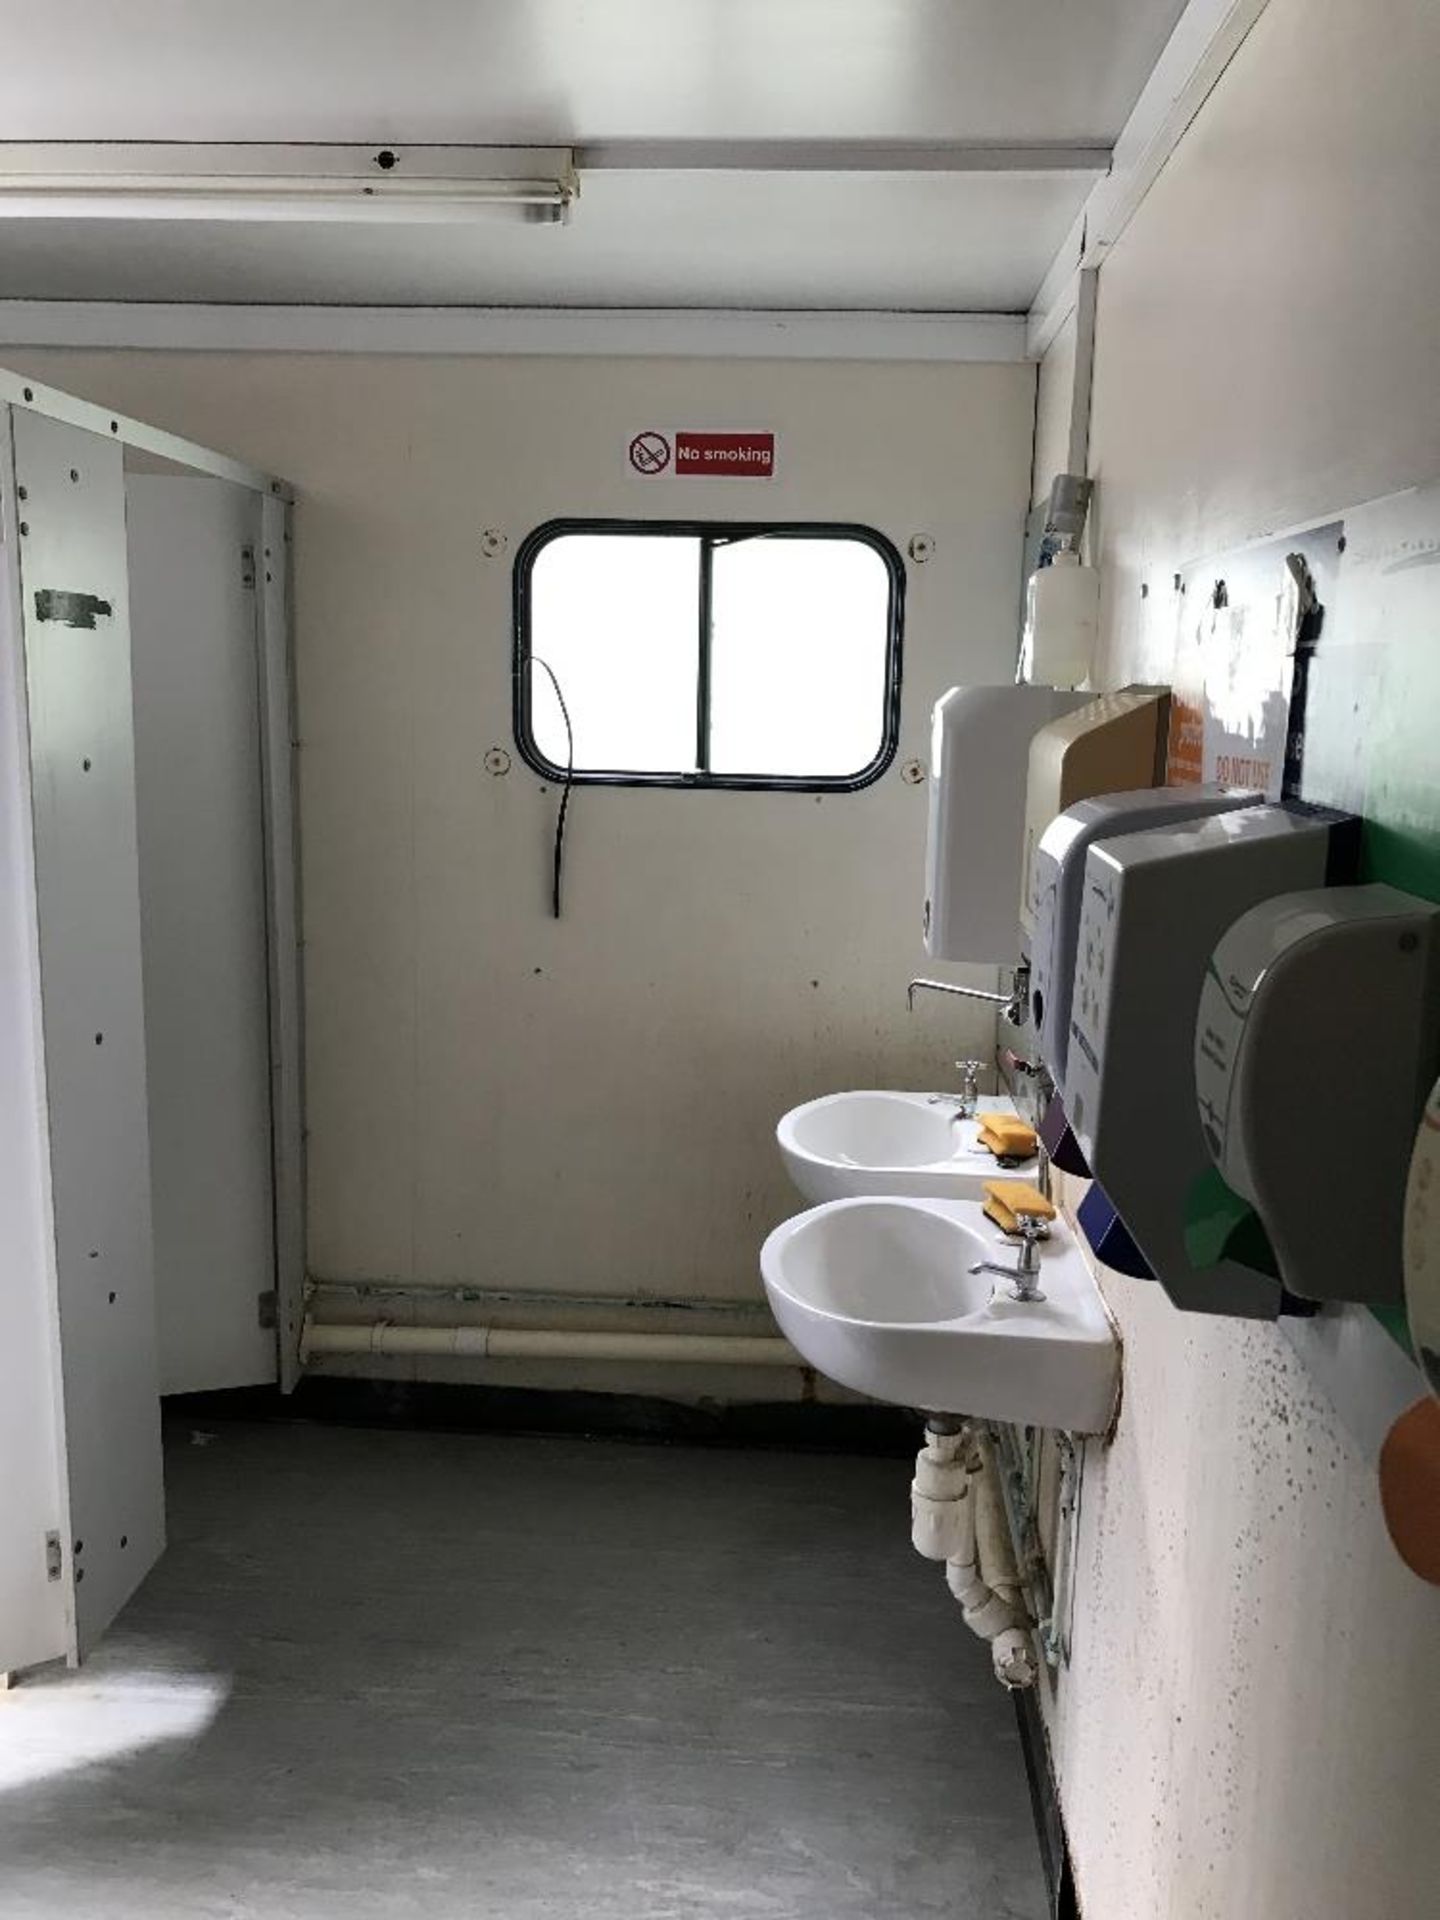 Portacabin jack legged staff toilet unit - Image 5 of 12